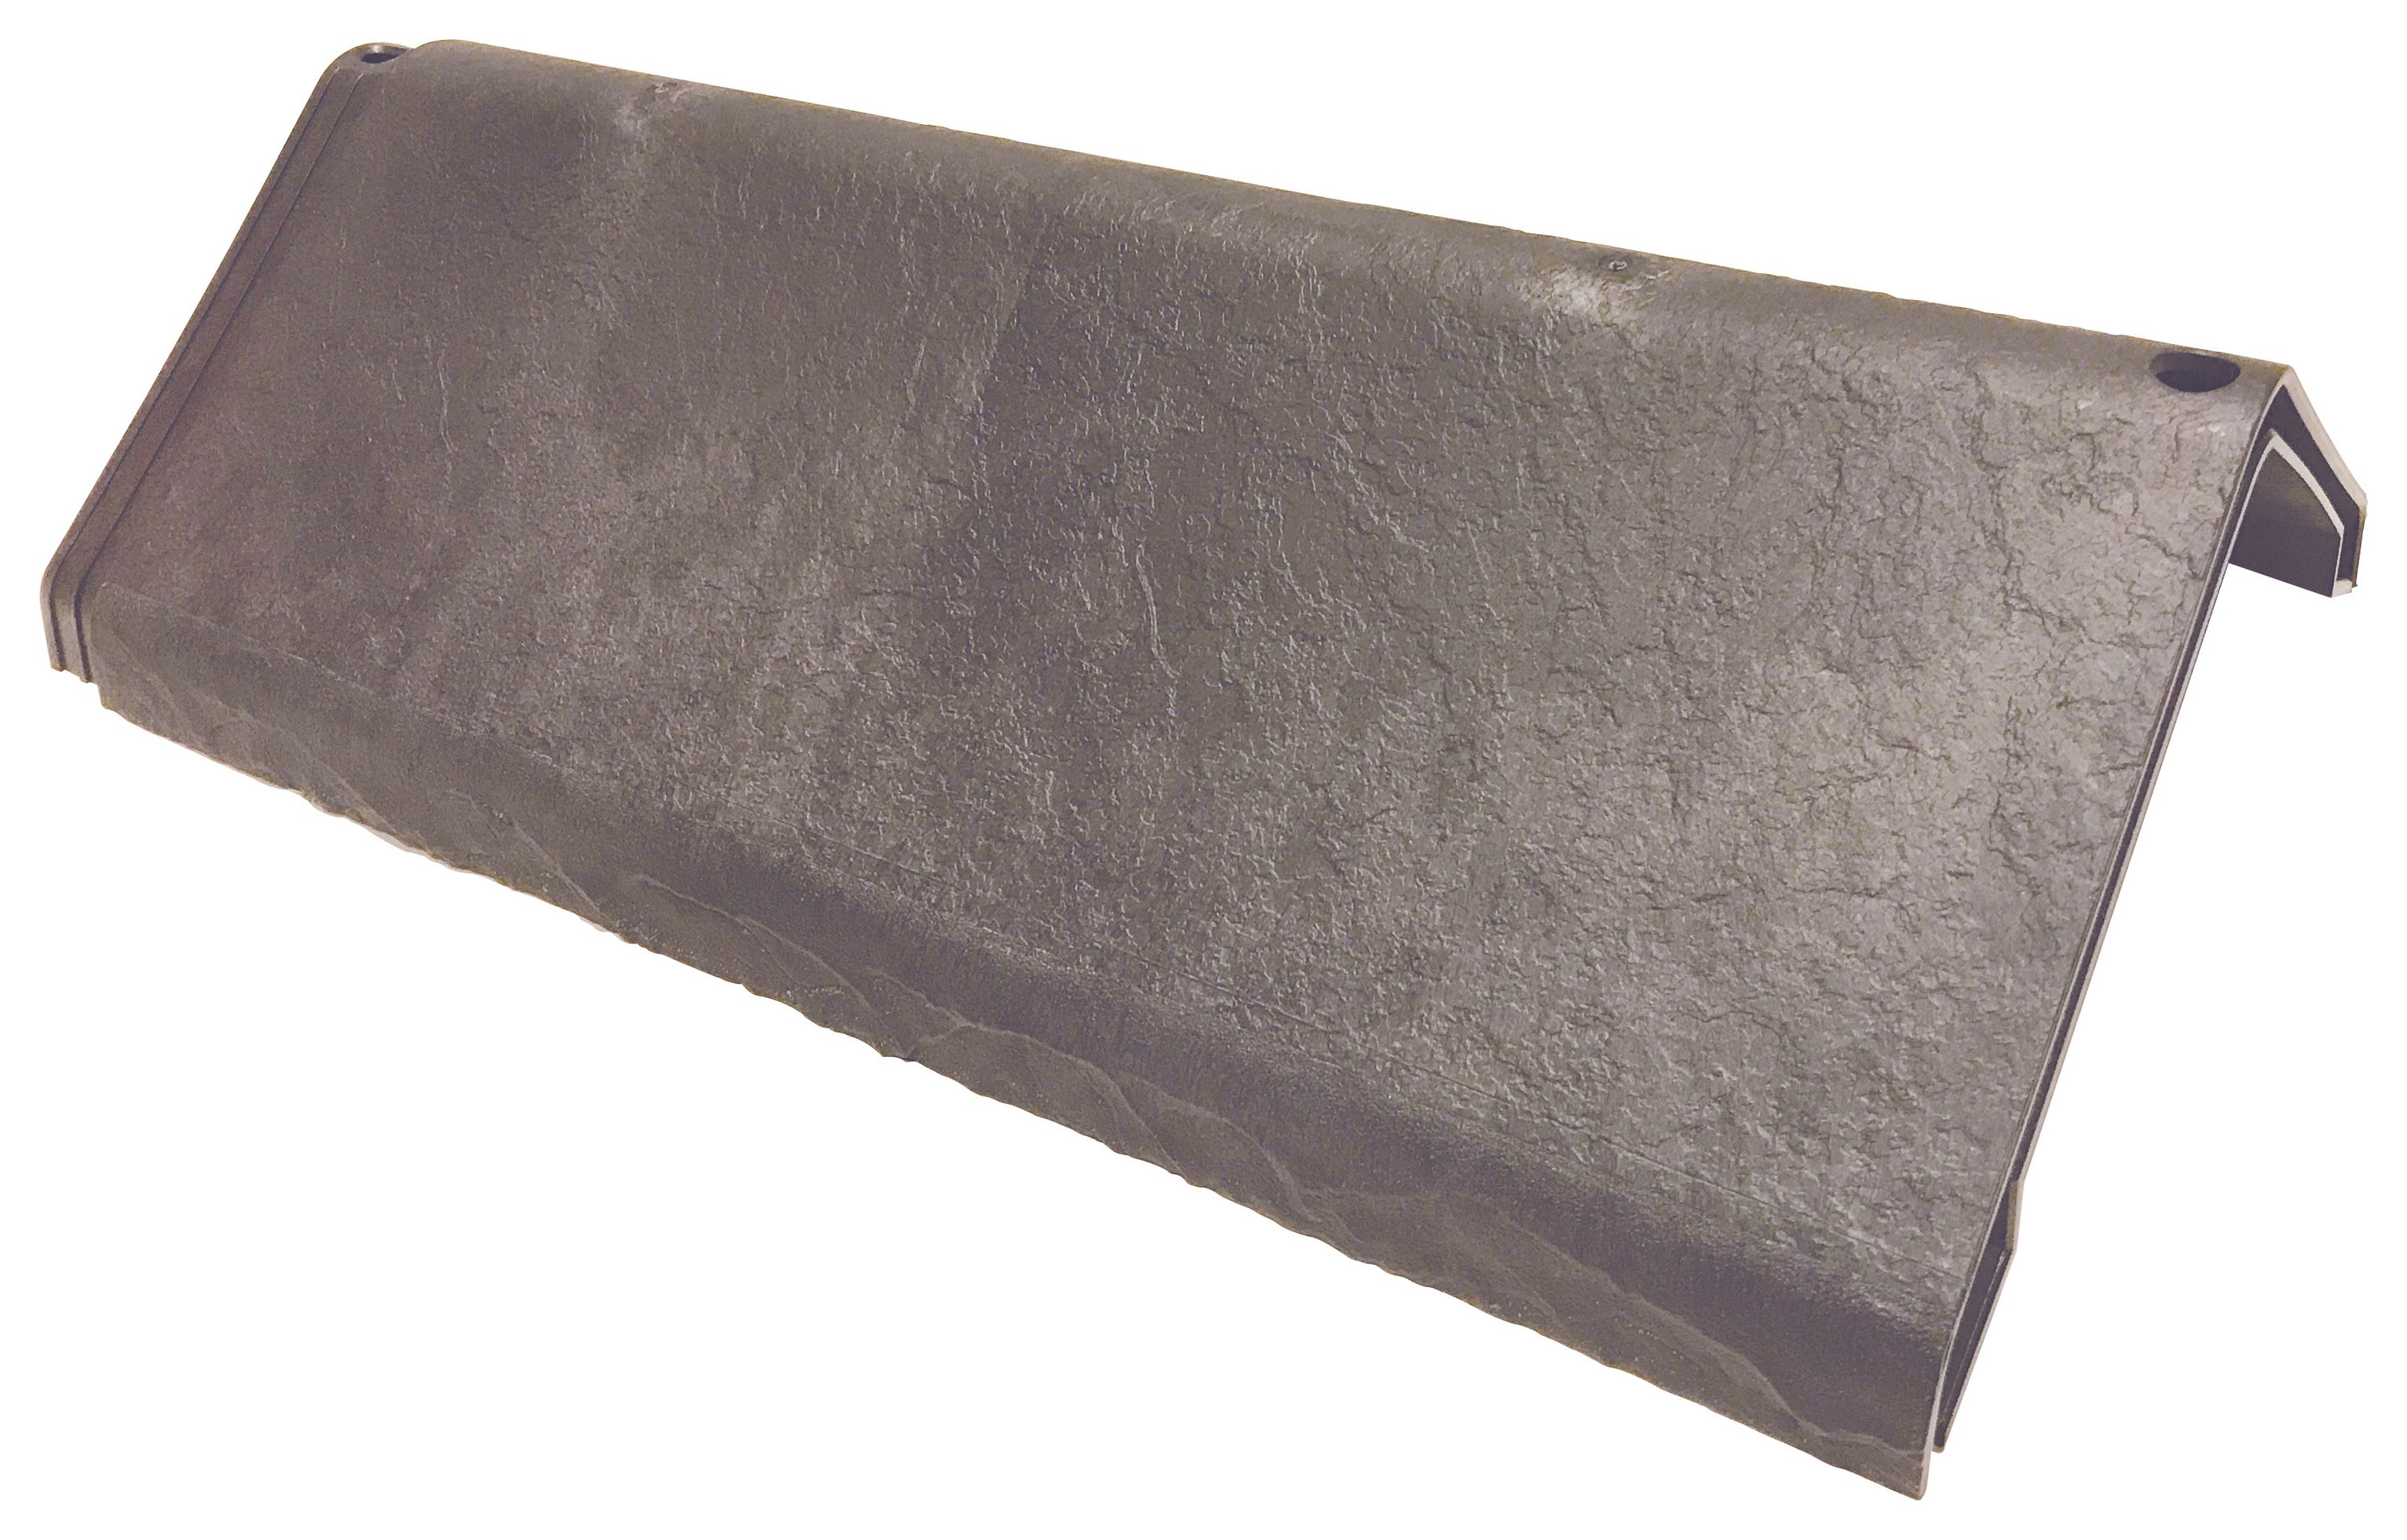 Image of Envirotile Plastic Lightweight Dark Brown Main Ridge Cap - 425 x 245 x 6mm